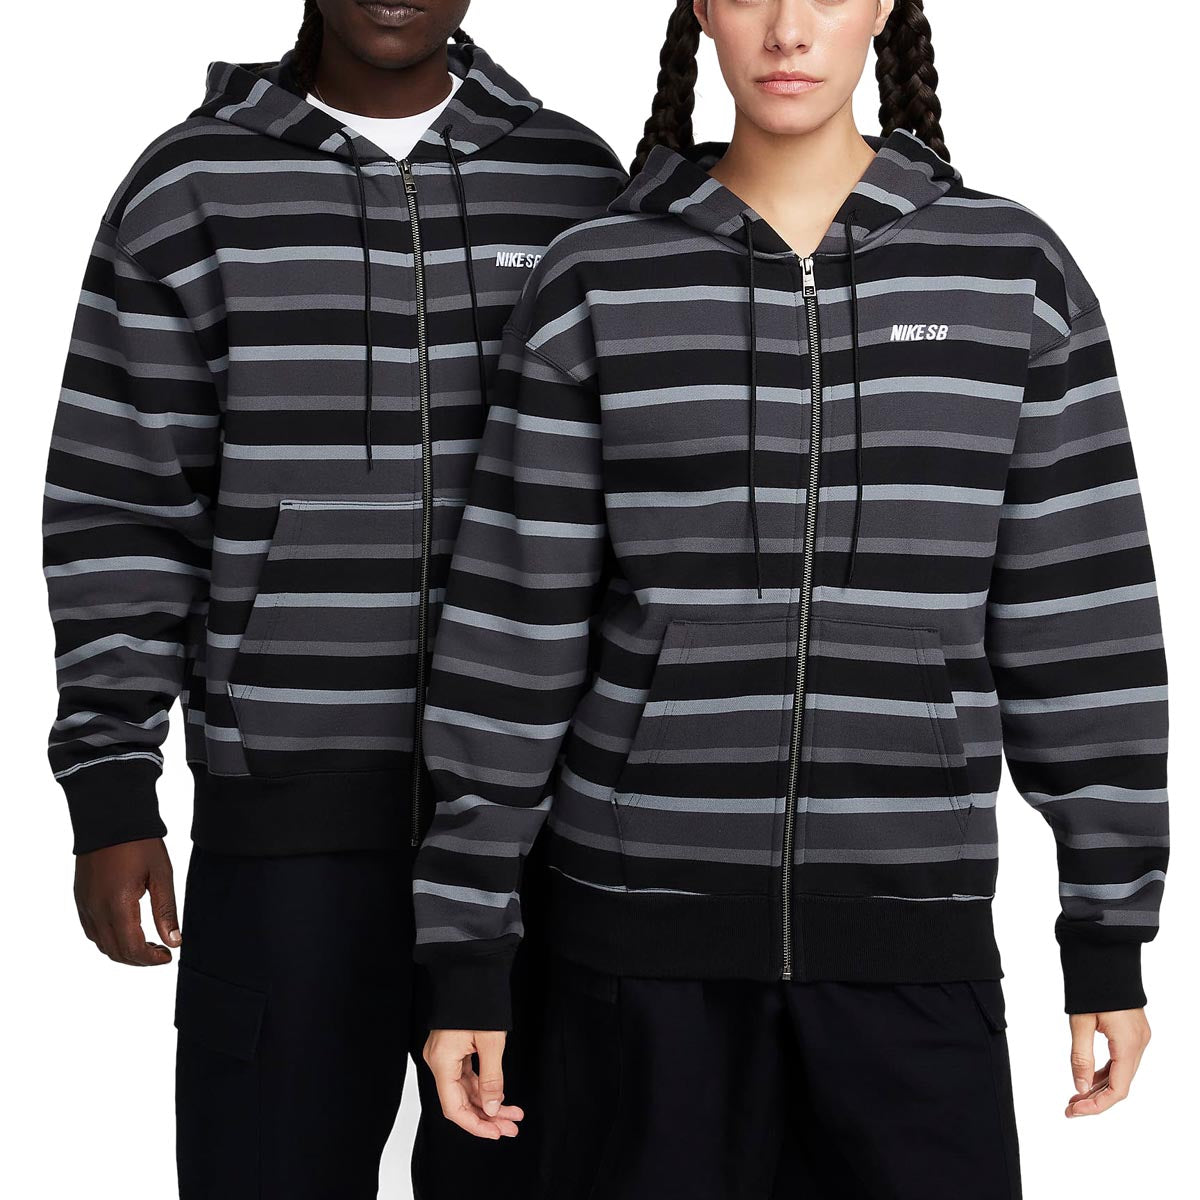 Nike SB Striped Zip Up Hoodie - Cool Grey/Anthracite/White image 2